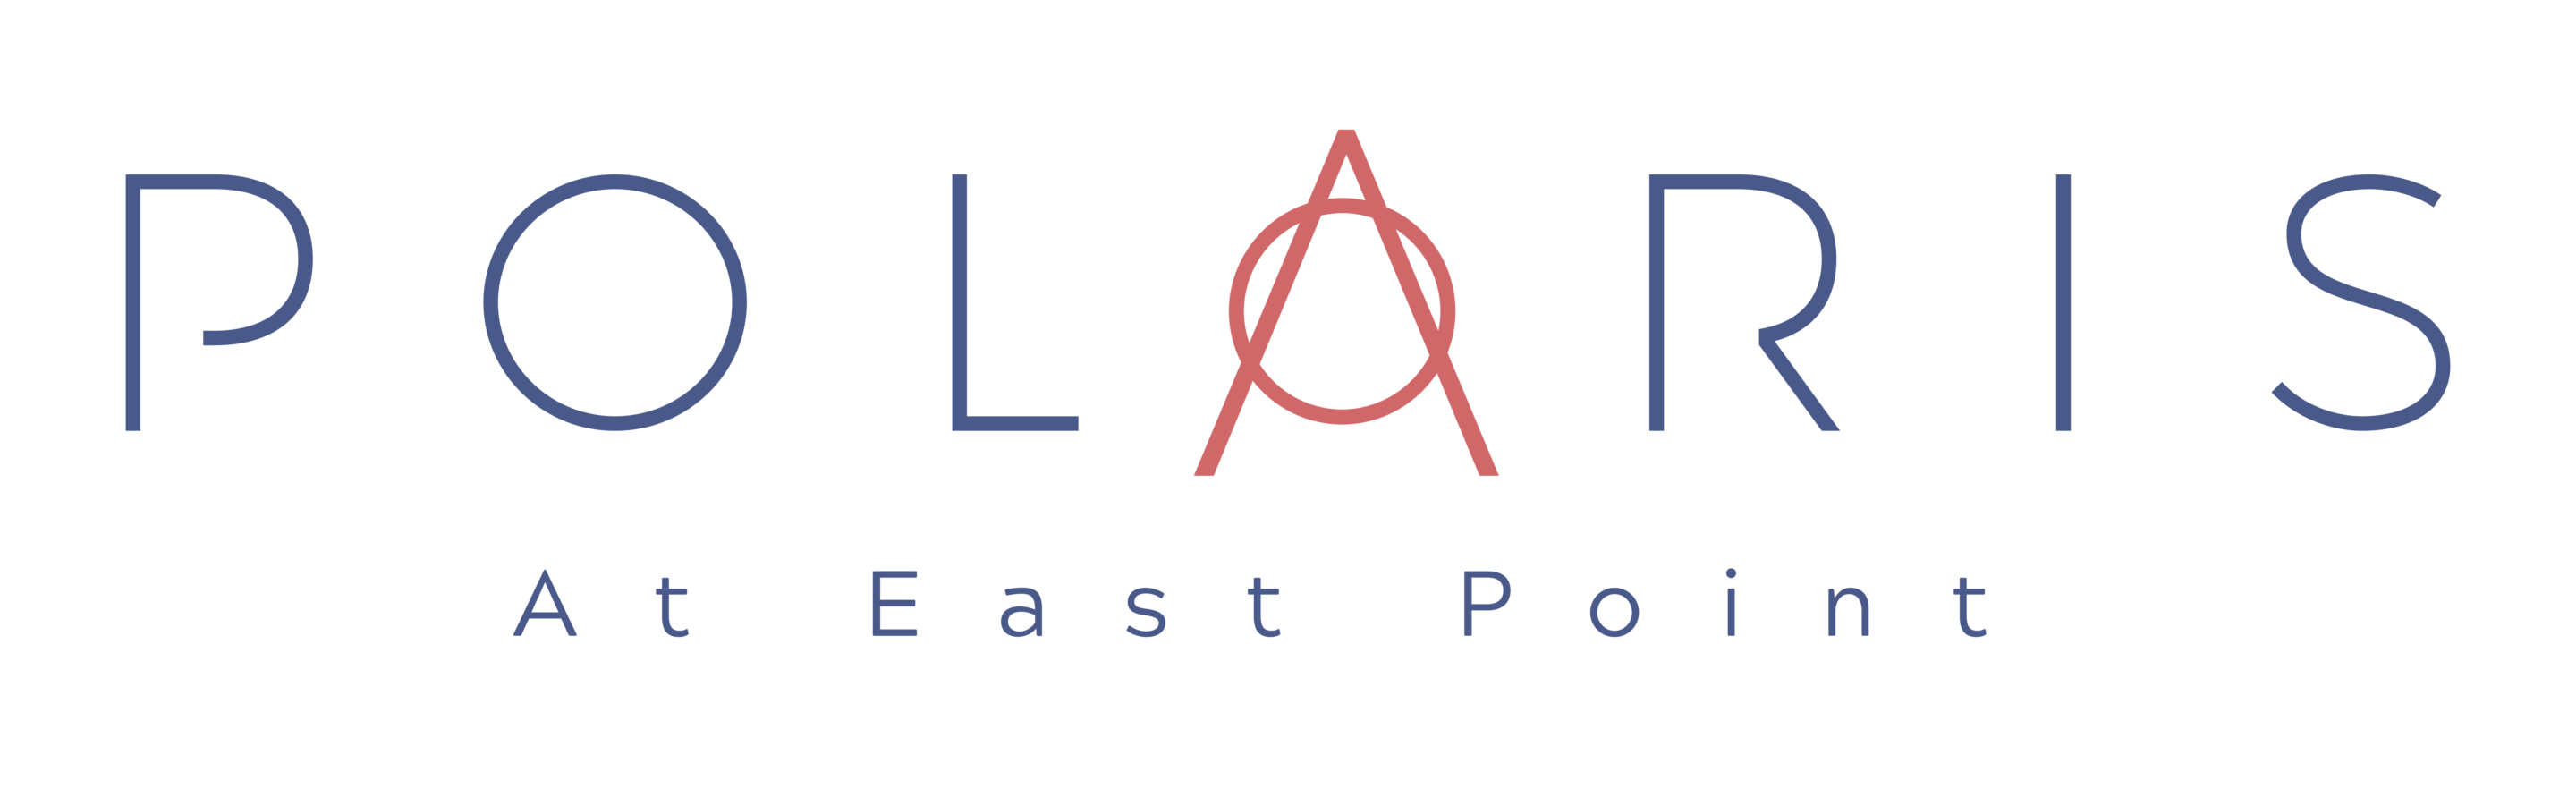 Logo Polaris At East Point